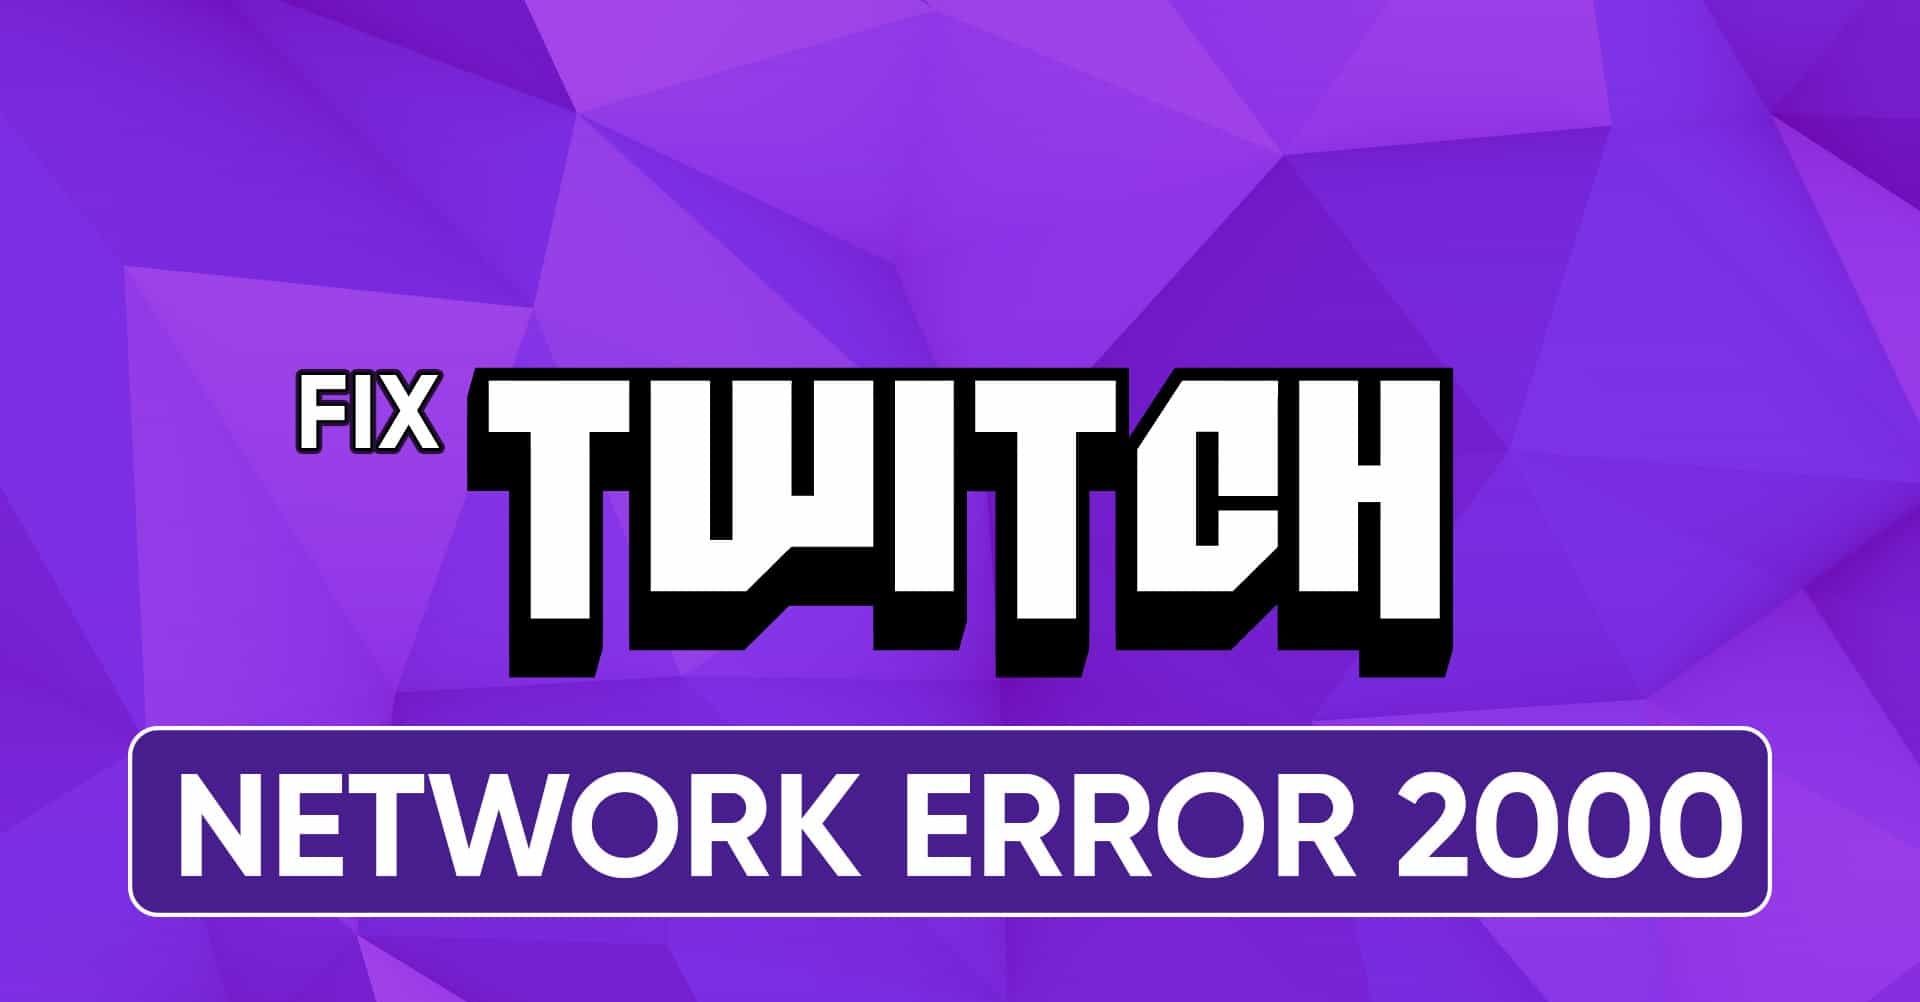 Fix twitch error 2000